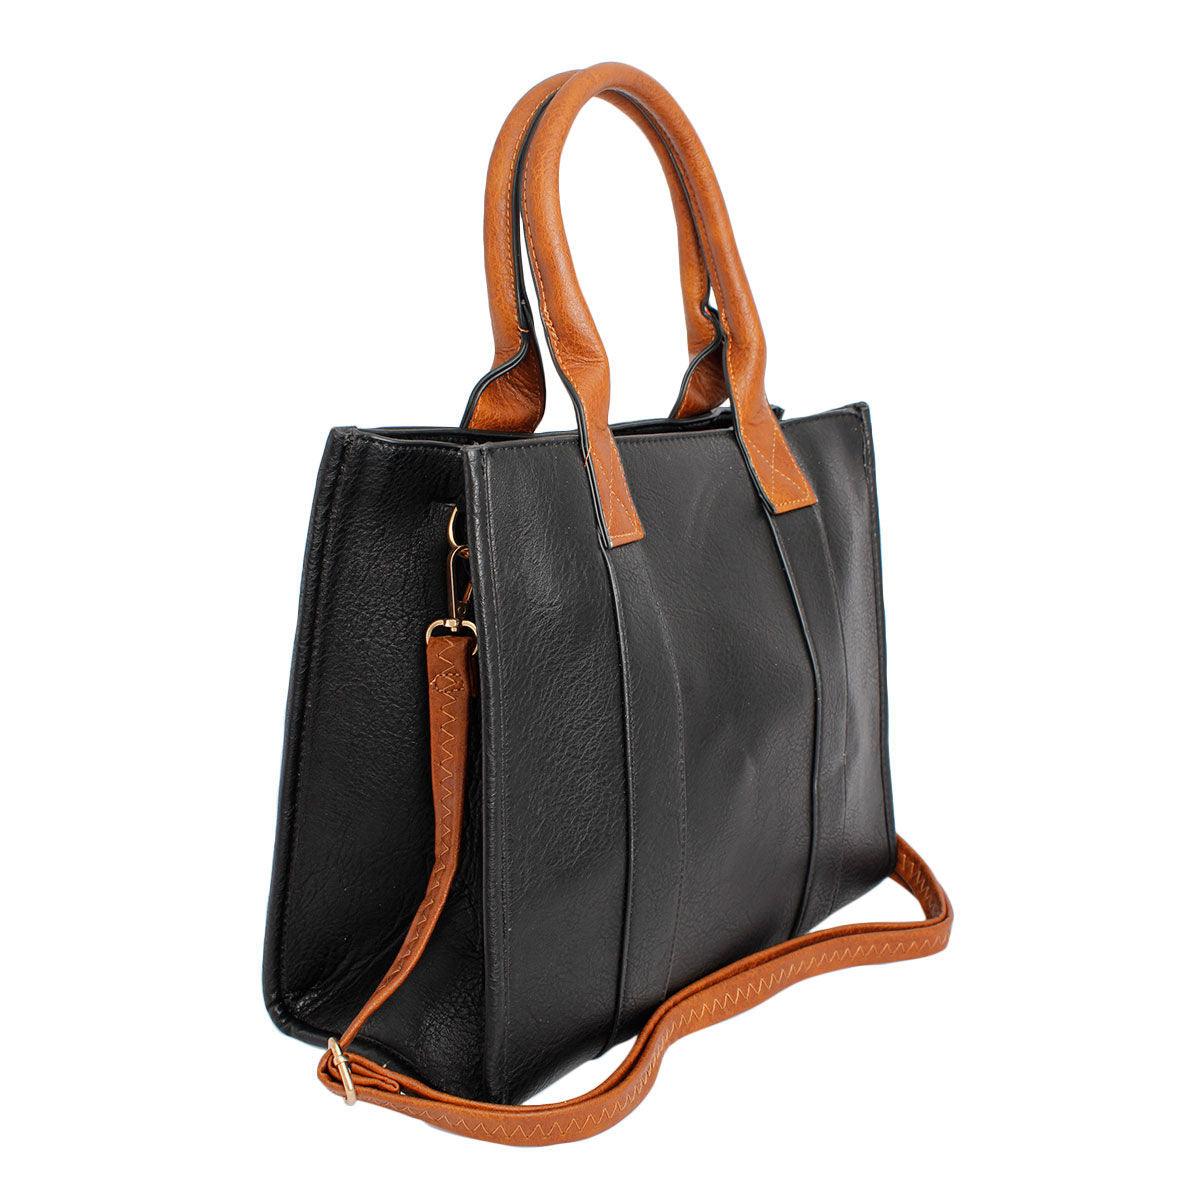 Black Satchel Handbag with Wristlet: Your Perfect Fashion Accessory